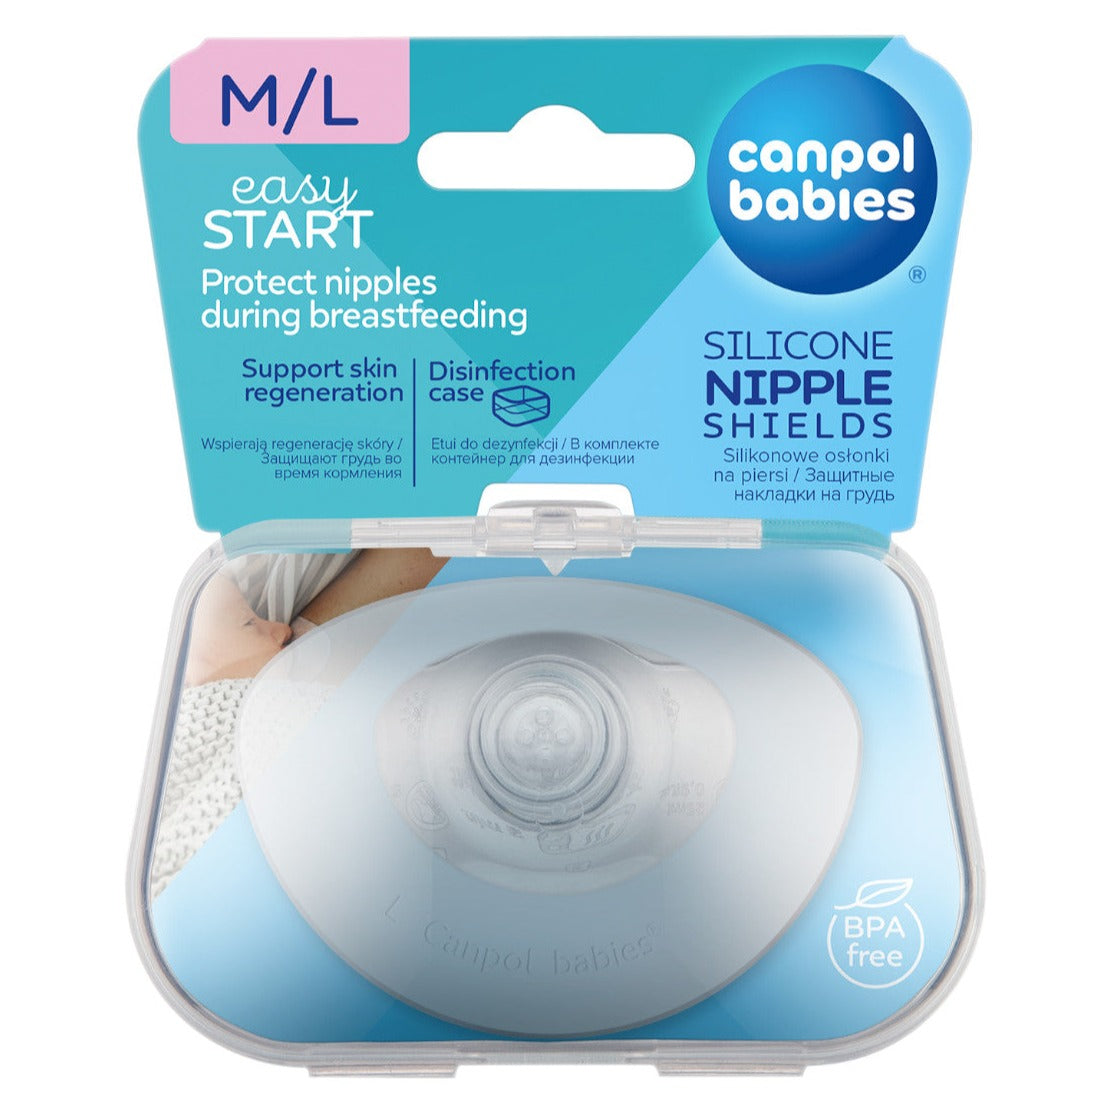 Babies Canpol: Easystart M / L Silicone Mreasings M / L 2 PCS.